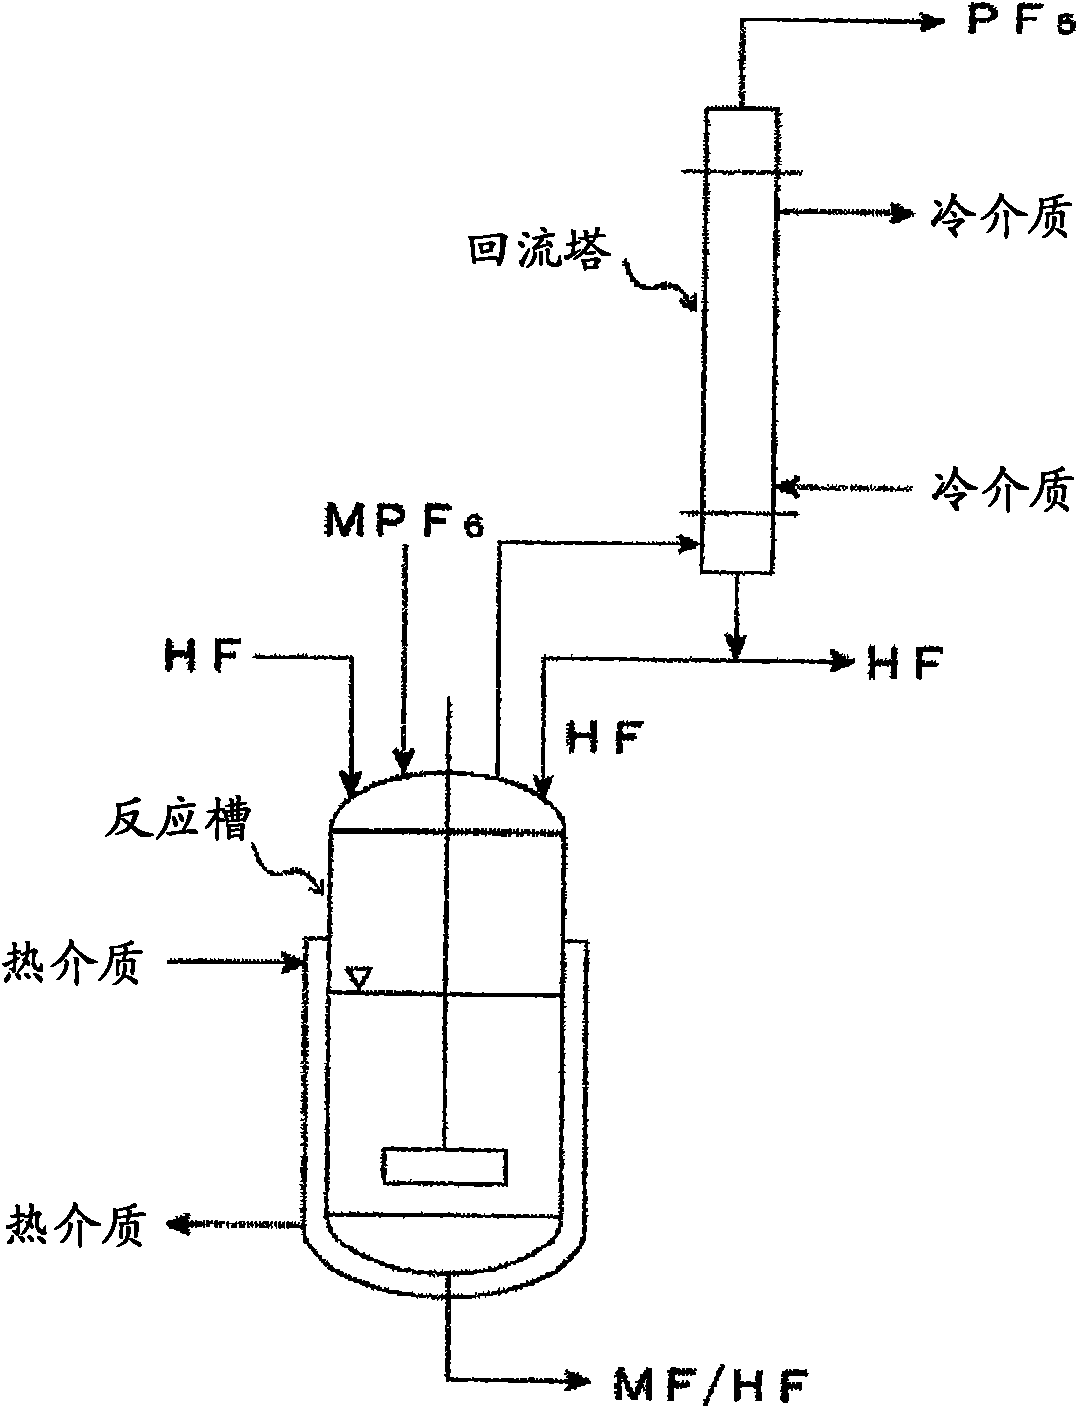 Processes for producing phosphorus pentafluoride and hexafluorophosphate